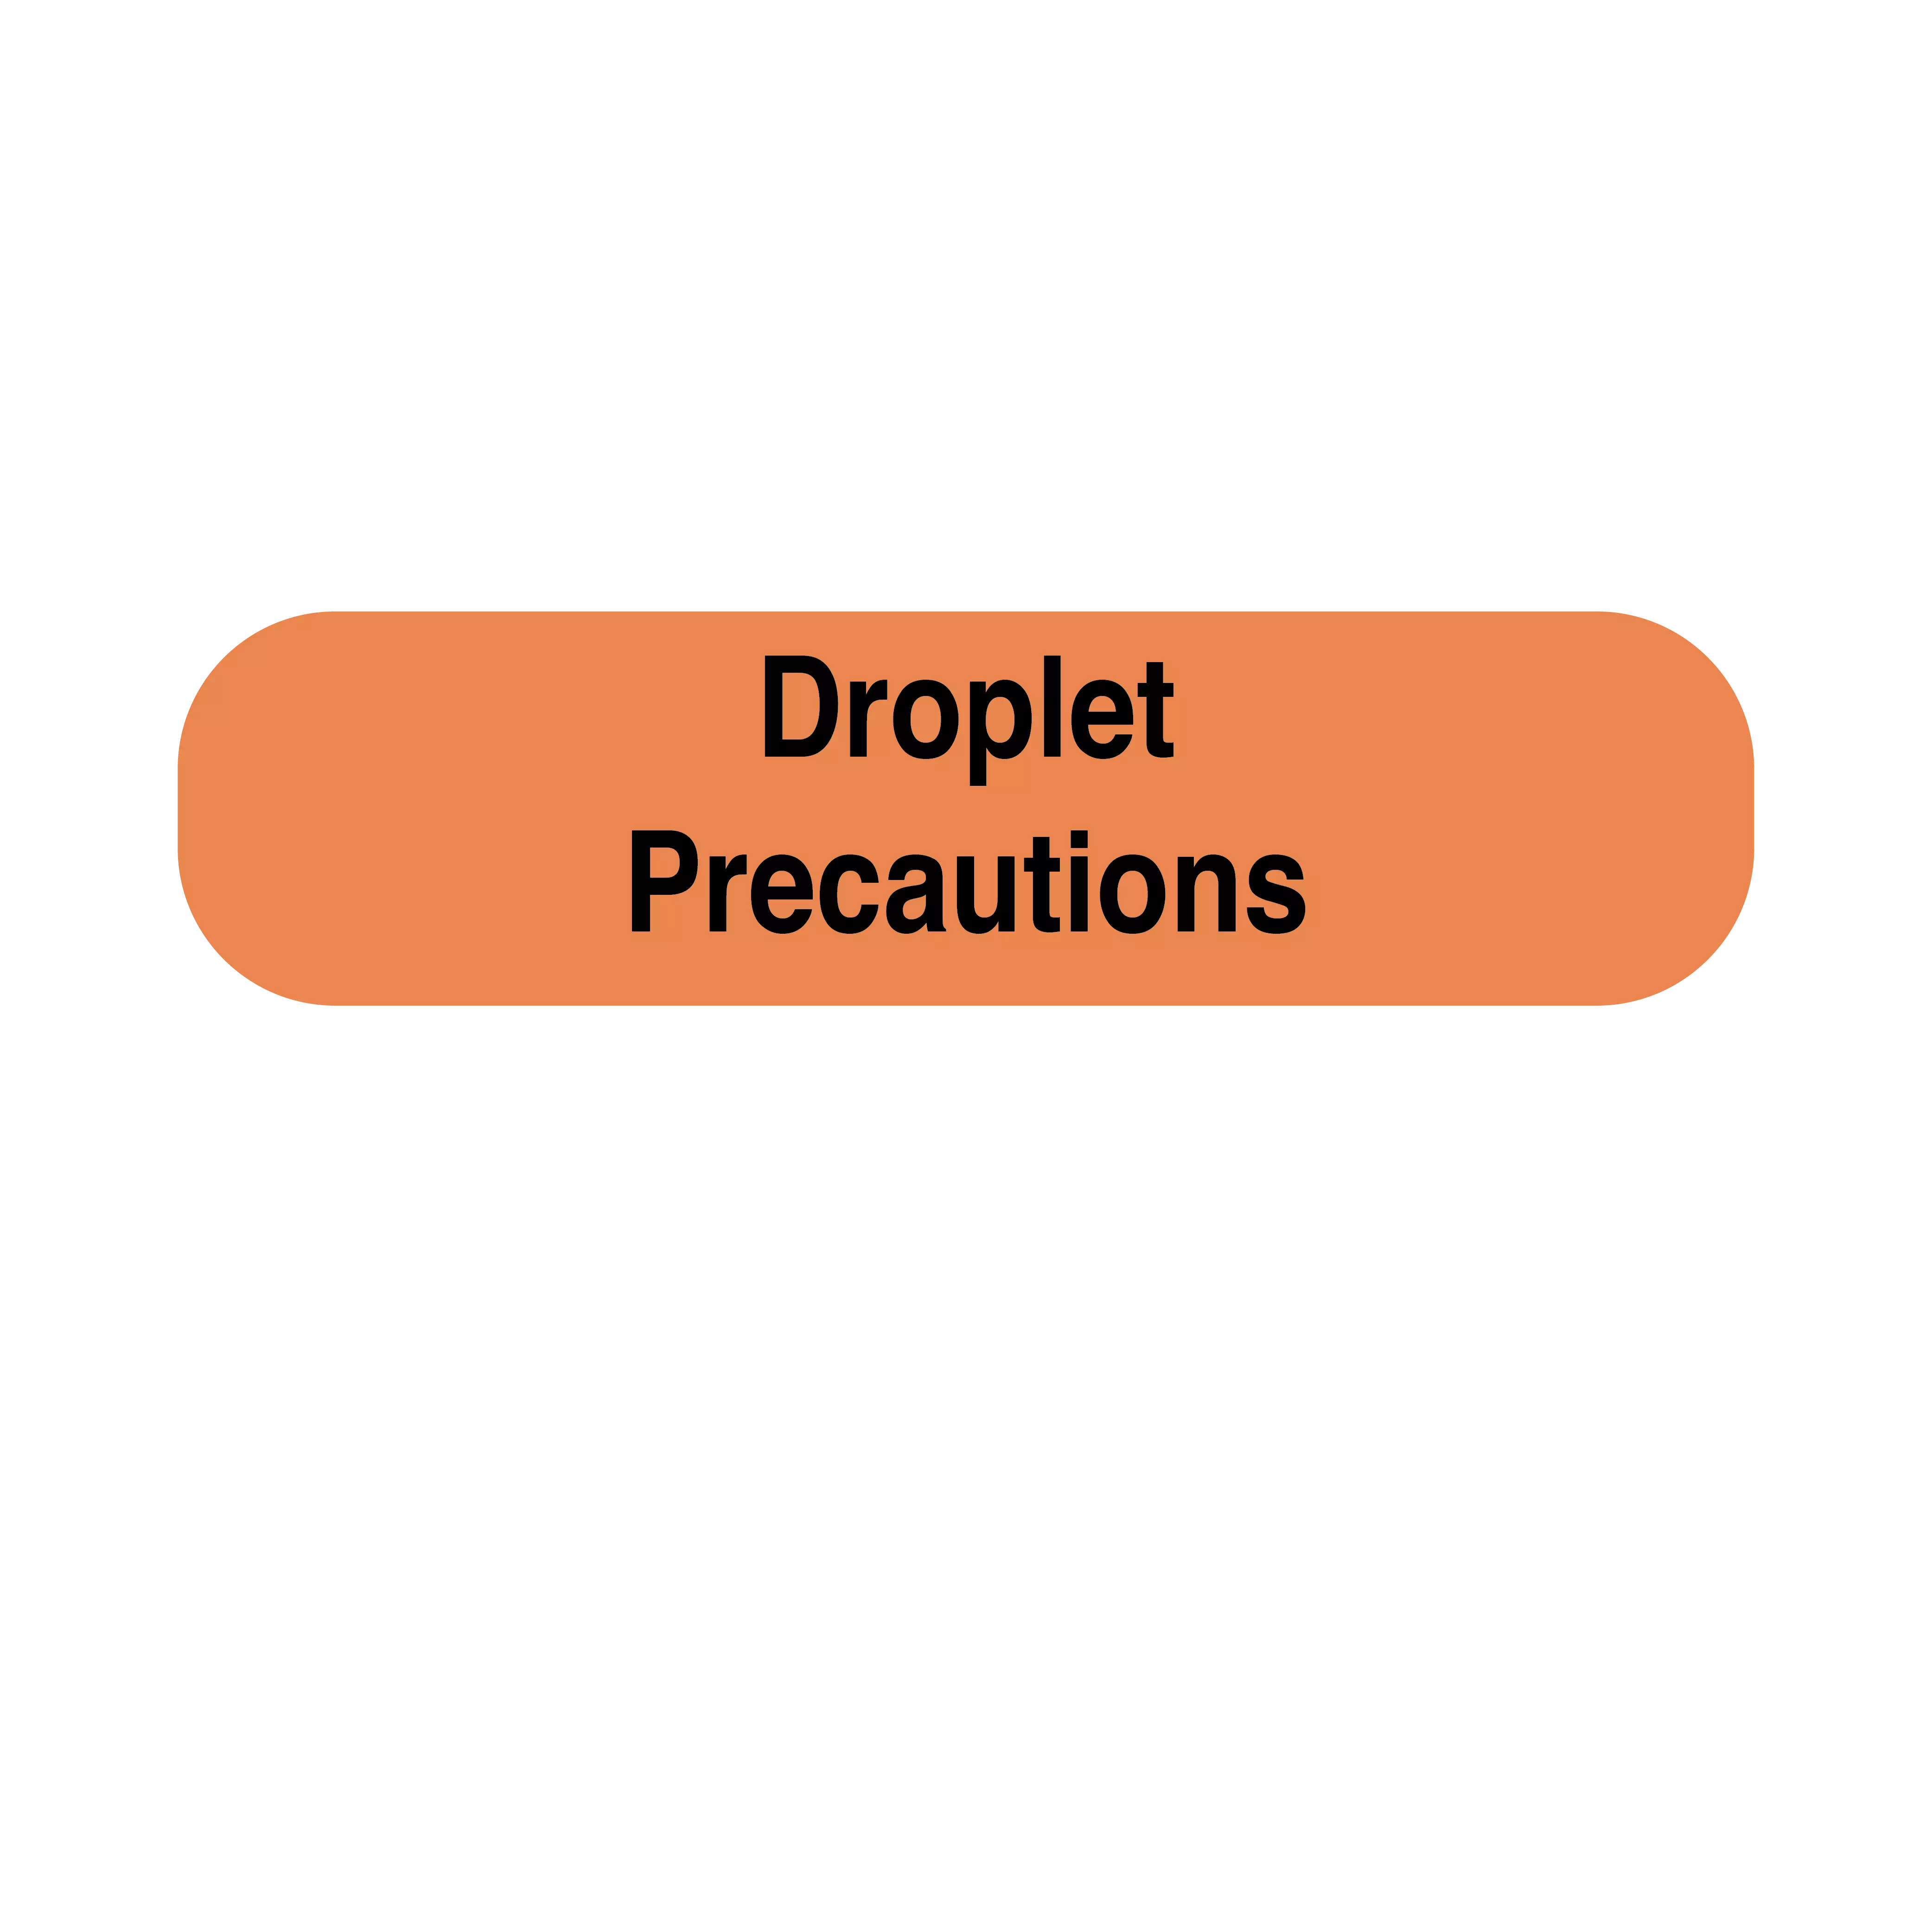 Precaution Labels - Droplet Precaution